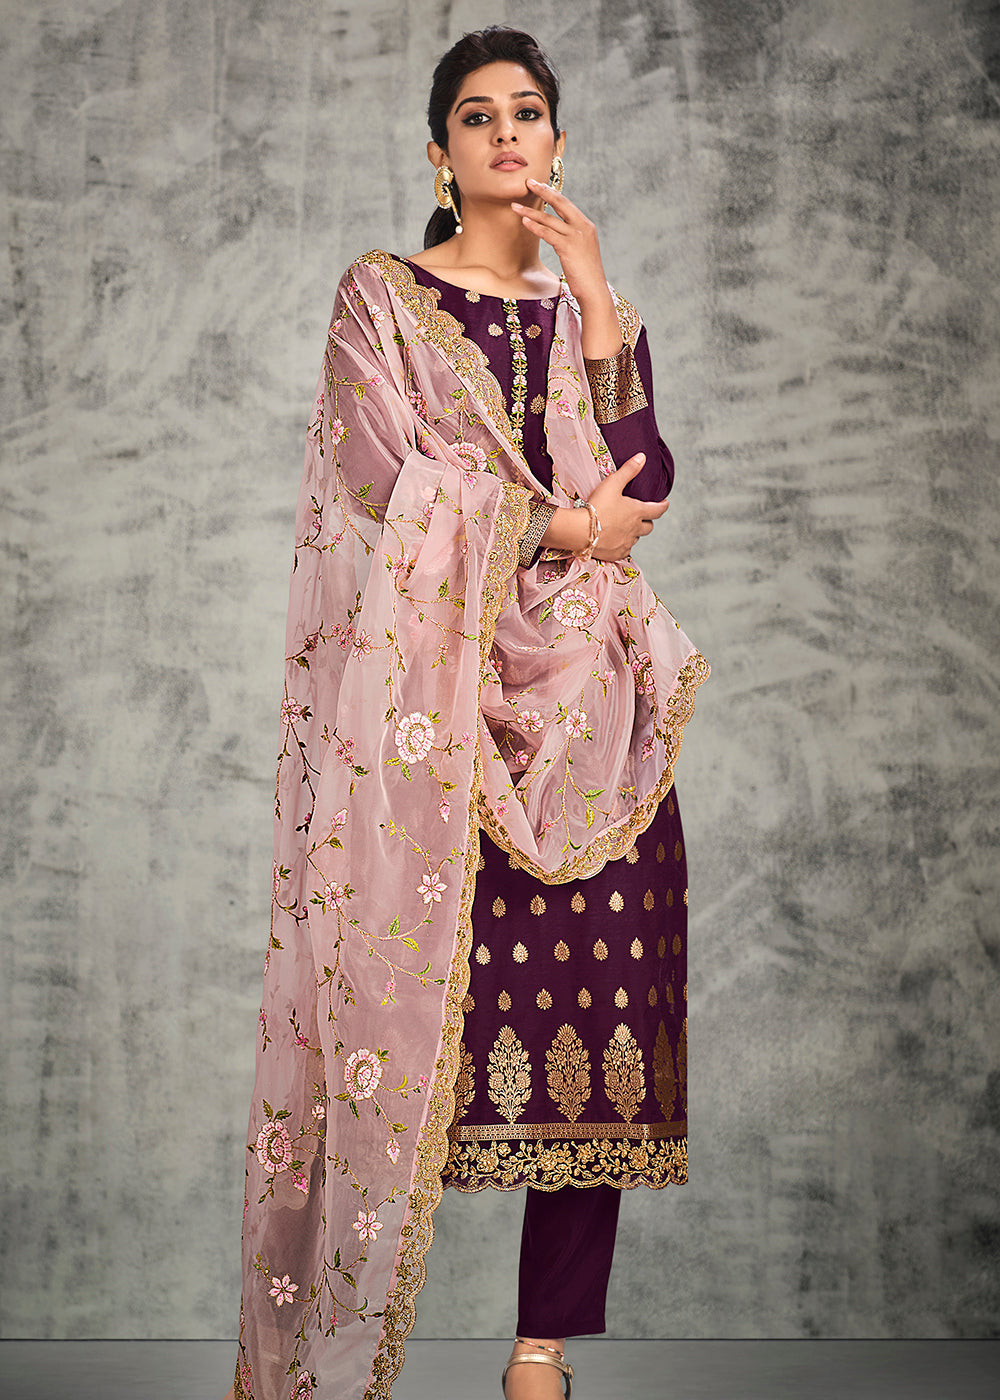 Buy Now Jacquard Silk Adorning Purple Pakistani Style Suit Online in USA, UK, Canada & Worldwide at Empress Clothing.